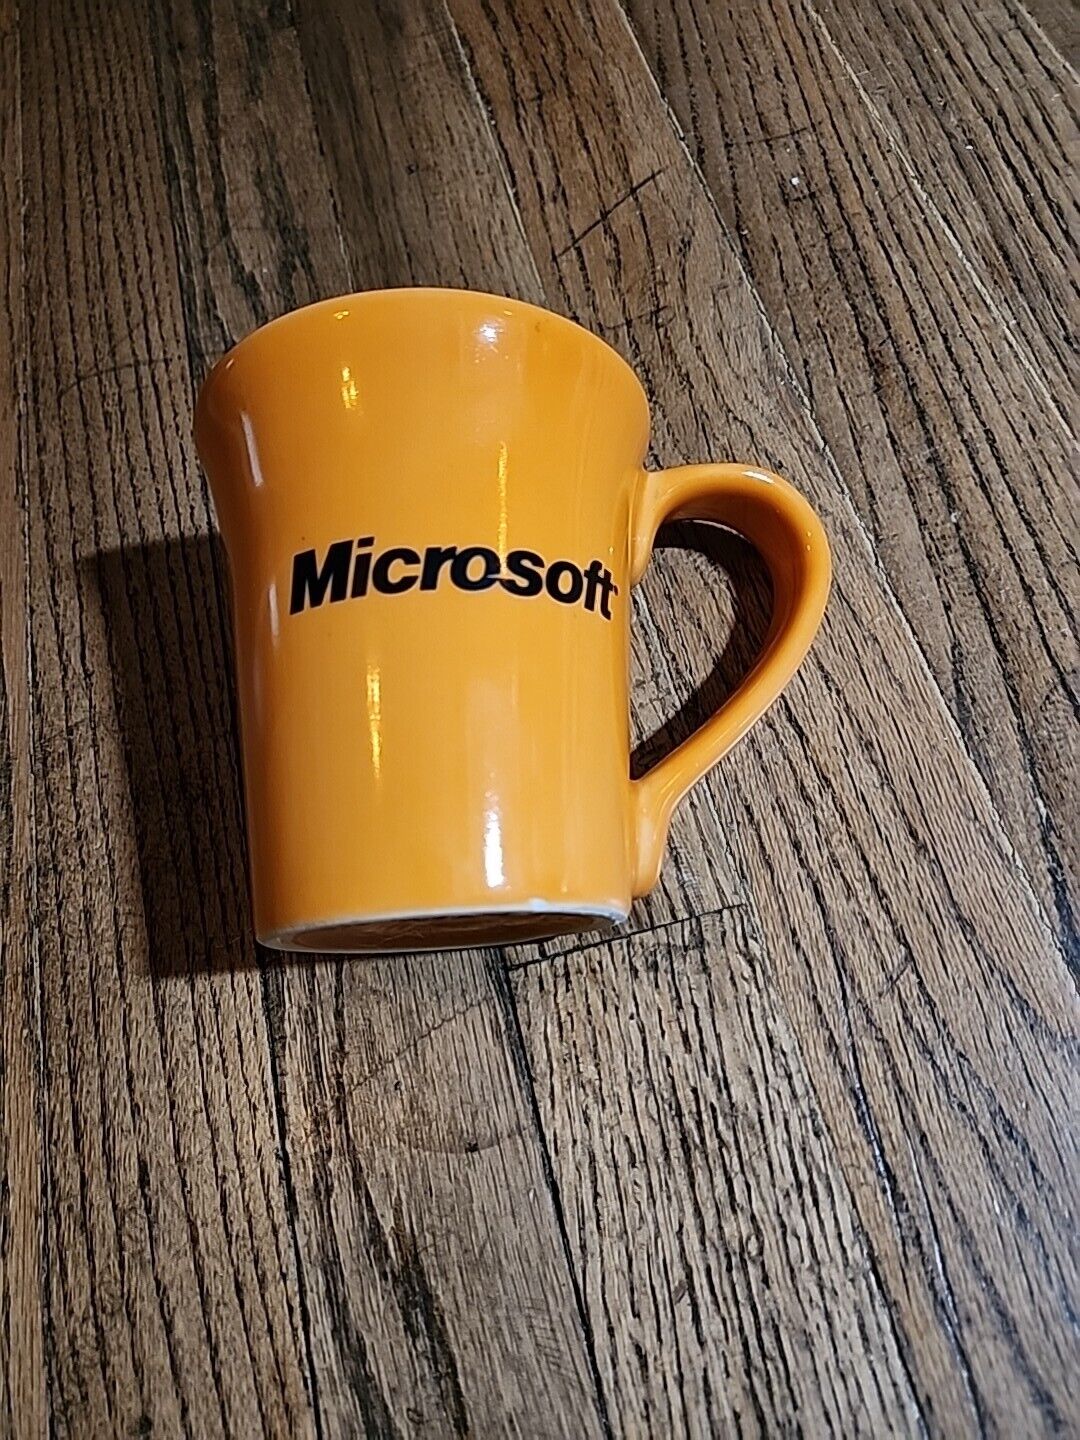 Microsoft coffee mug vintage early 1980's - very rare